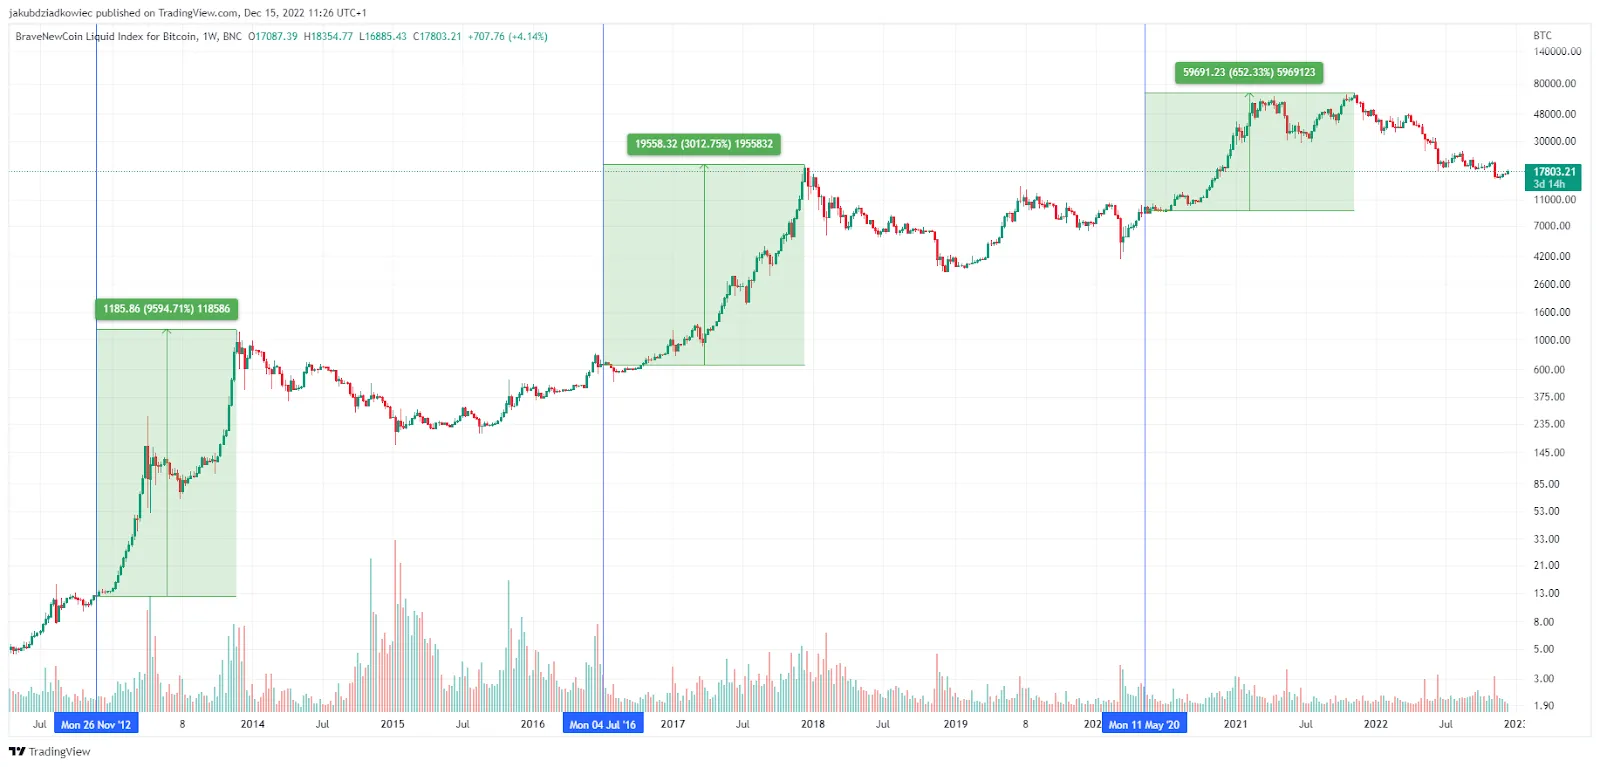 bitcoin historical chart showing halving cycles